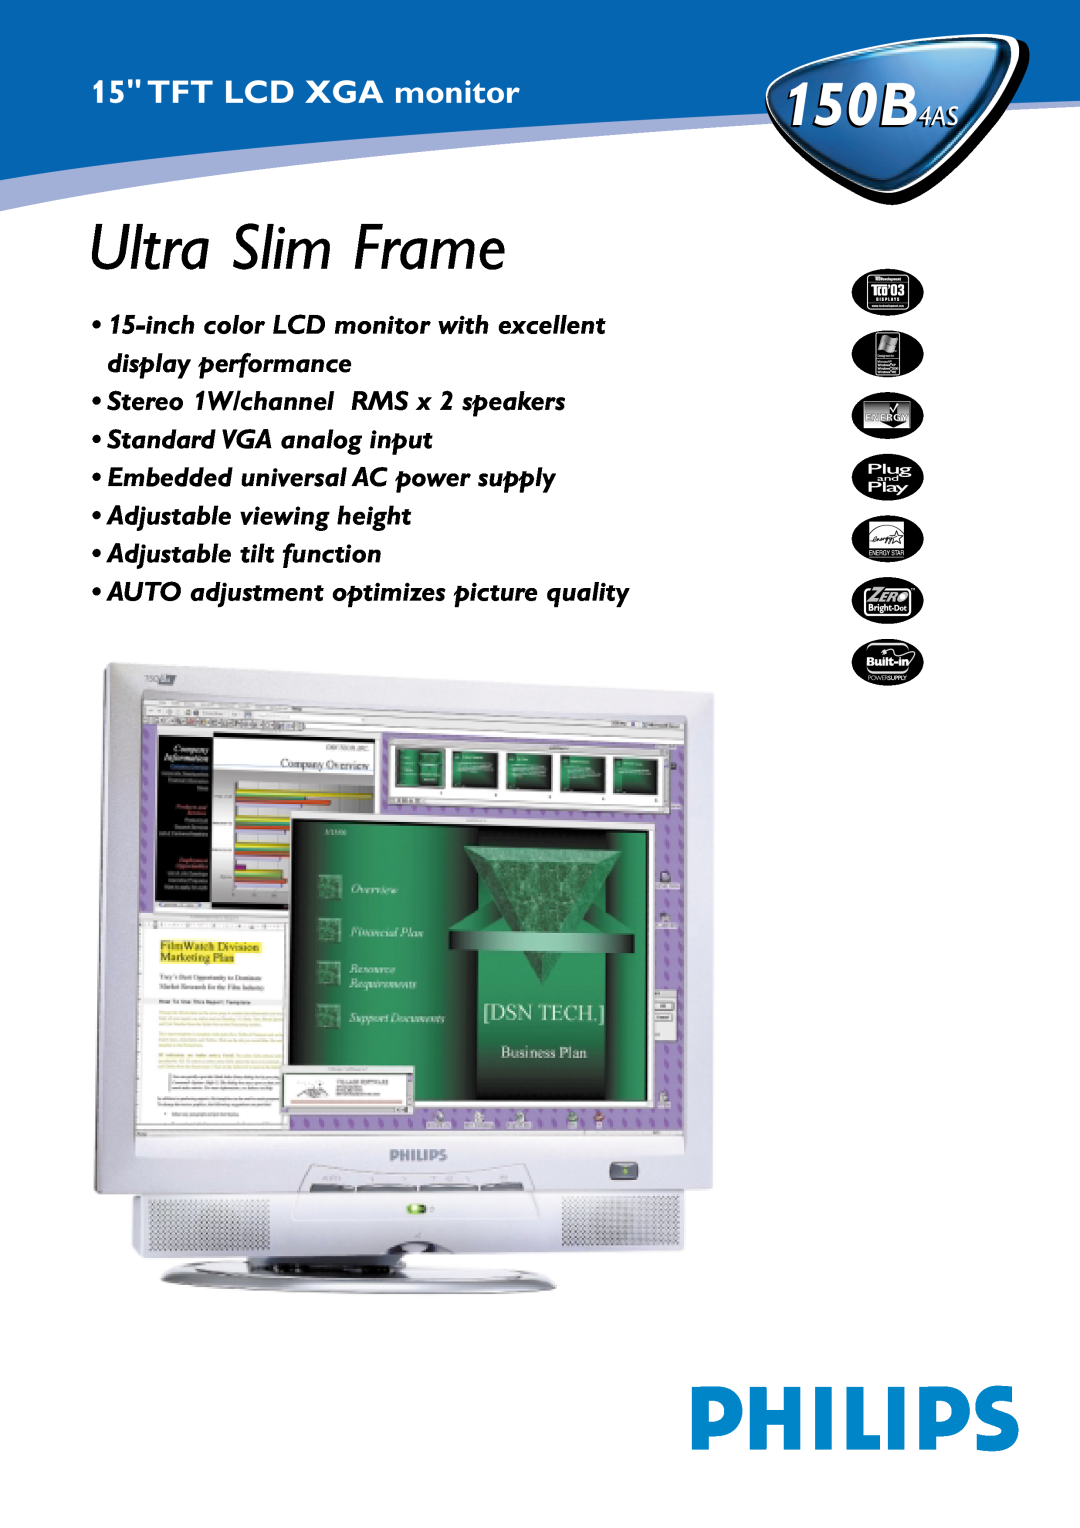 Philips 150B4AS manual Ultra Slim Frame, TFT LCD XGA monitor, Stereo 1W/channel RMS x 2 speakers, Adjustable tilt function 